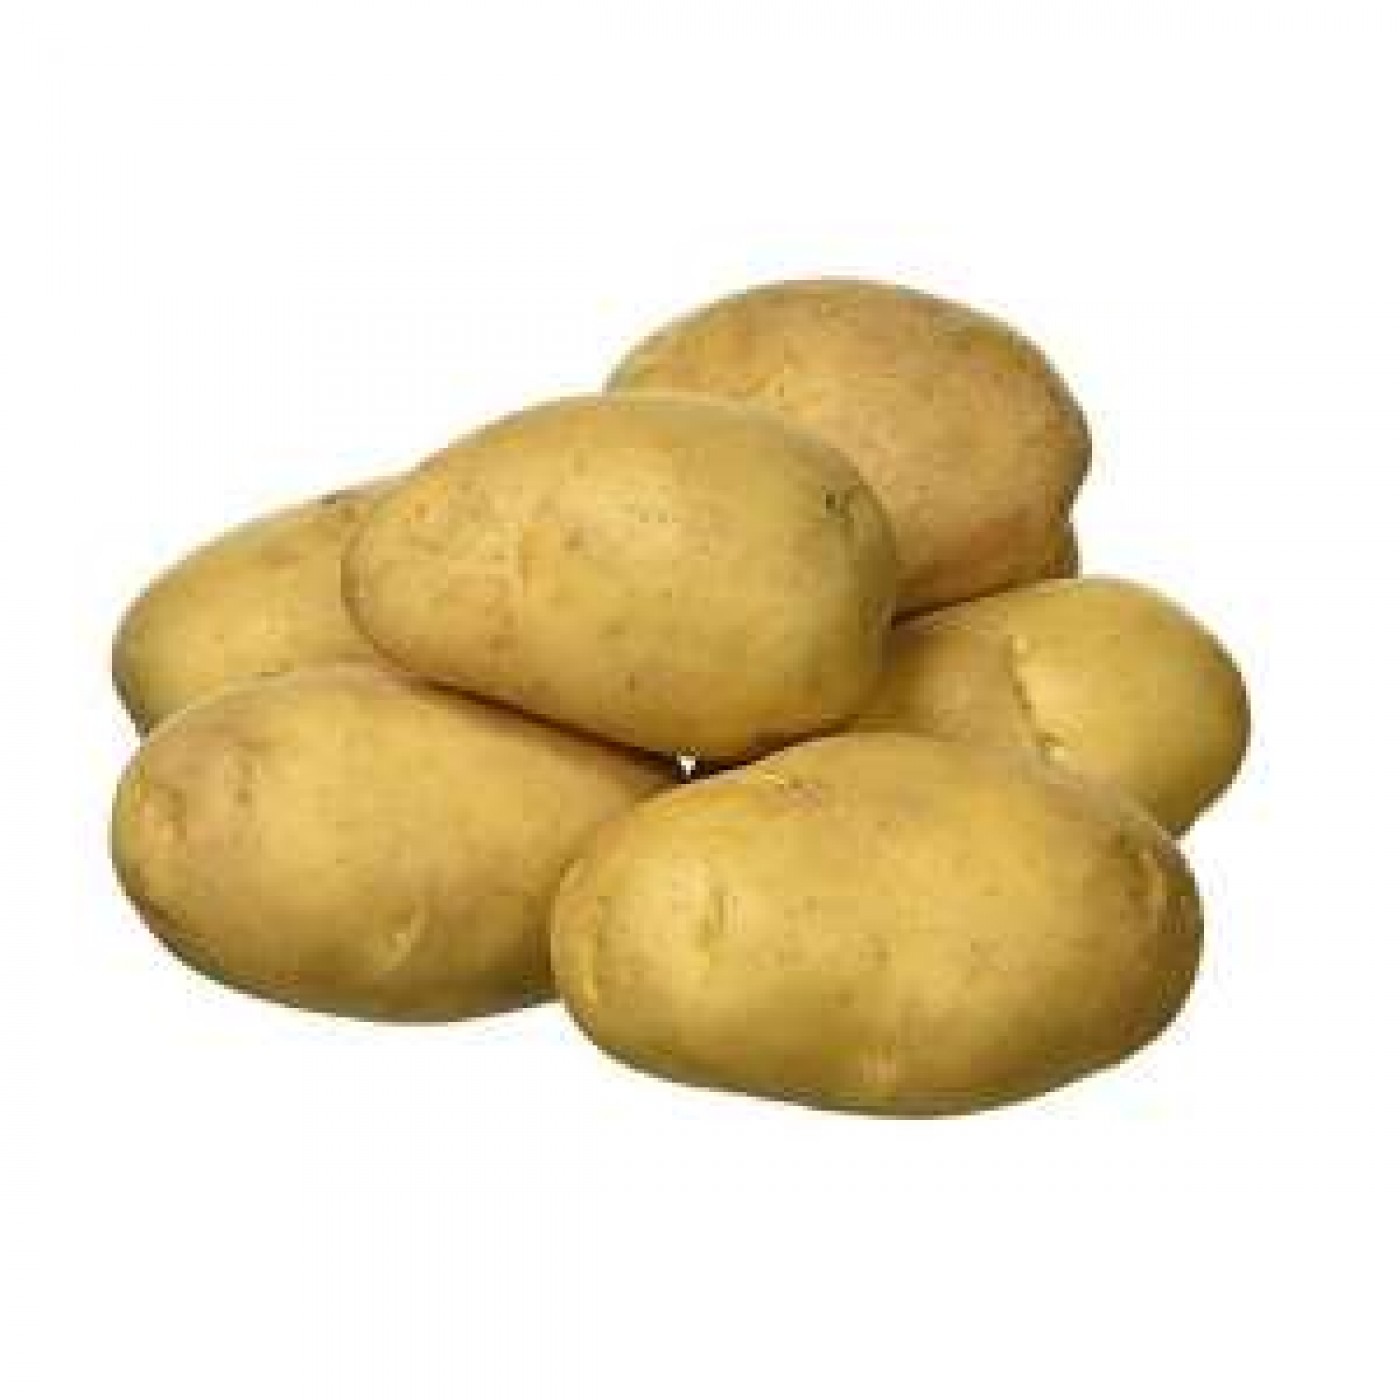 Potato 4.5kg (box)